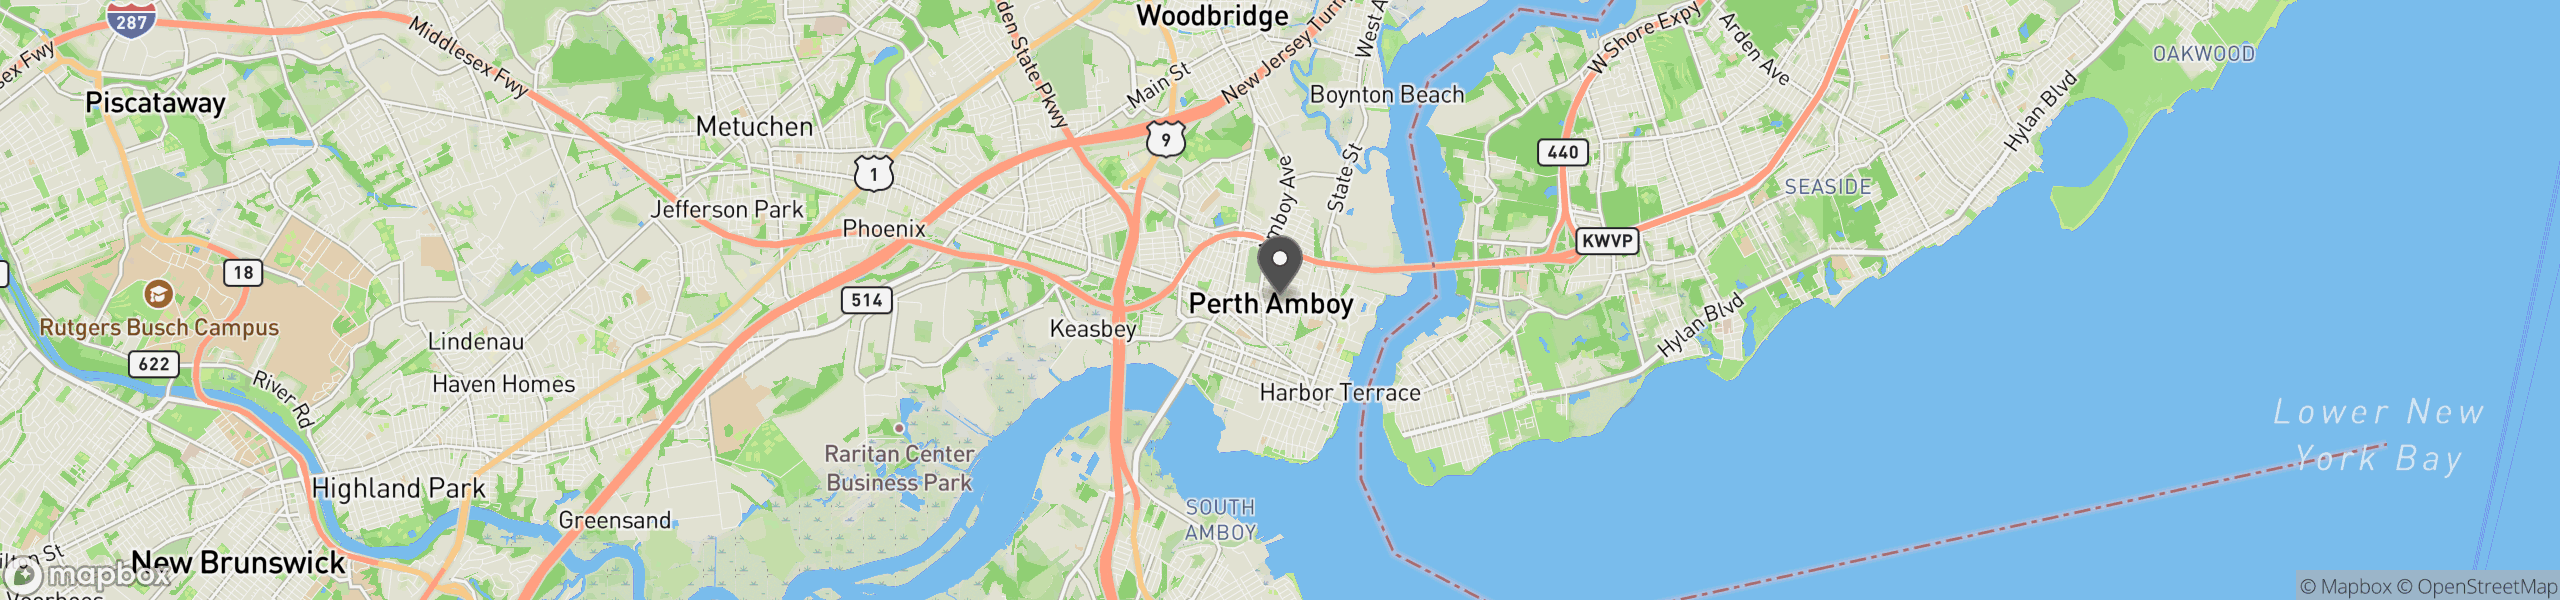 Perth Amboy, NJ 08861